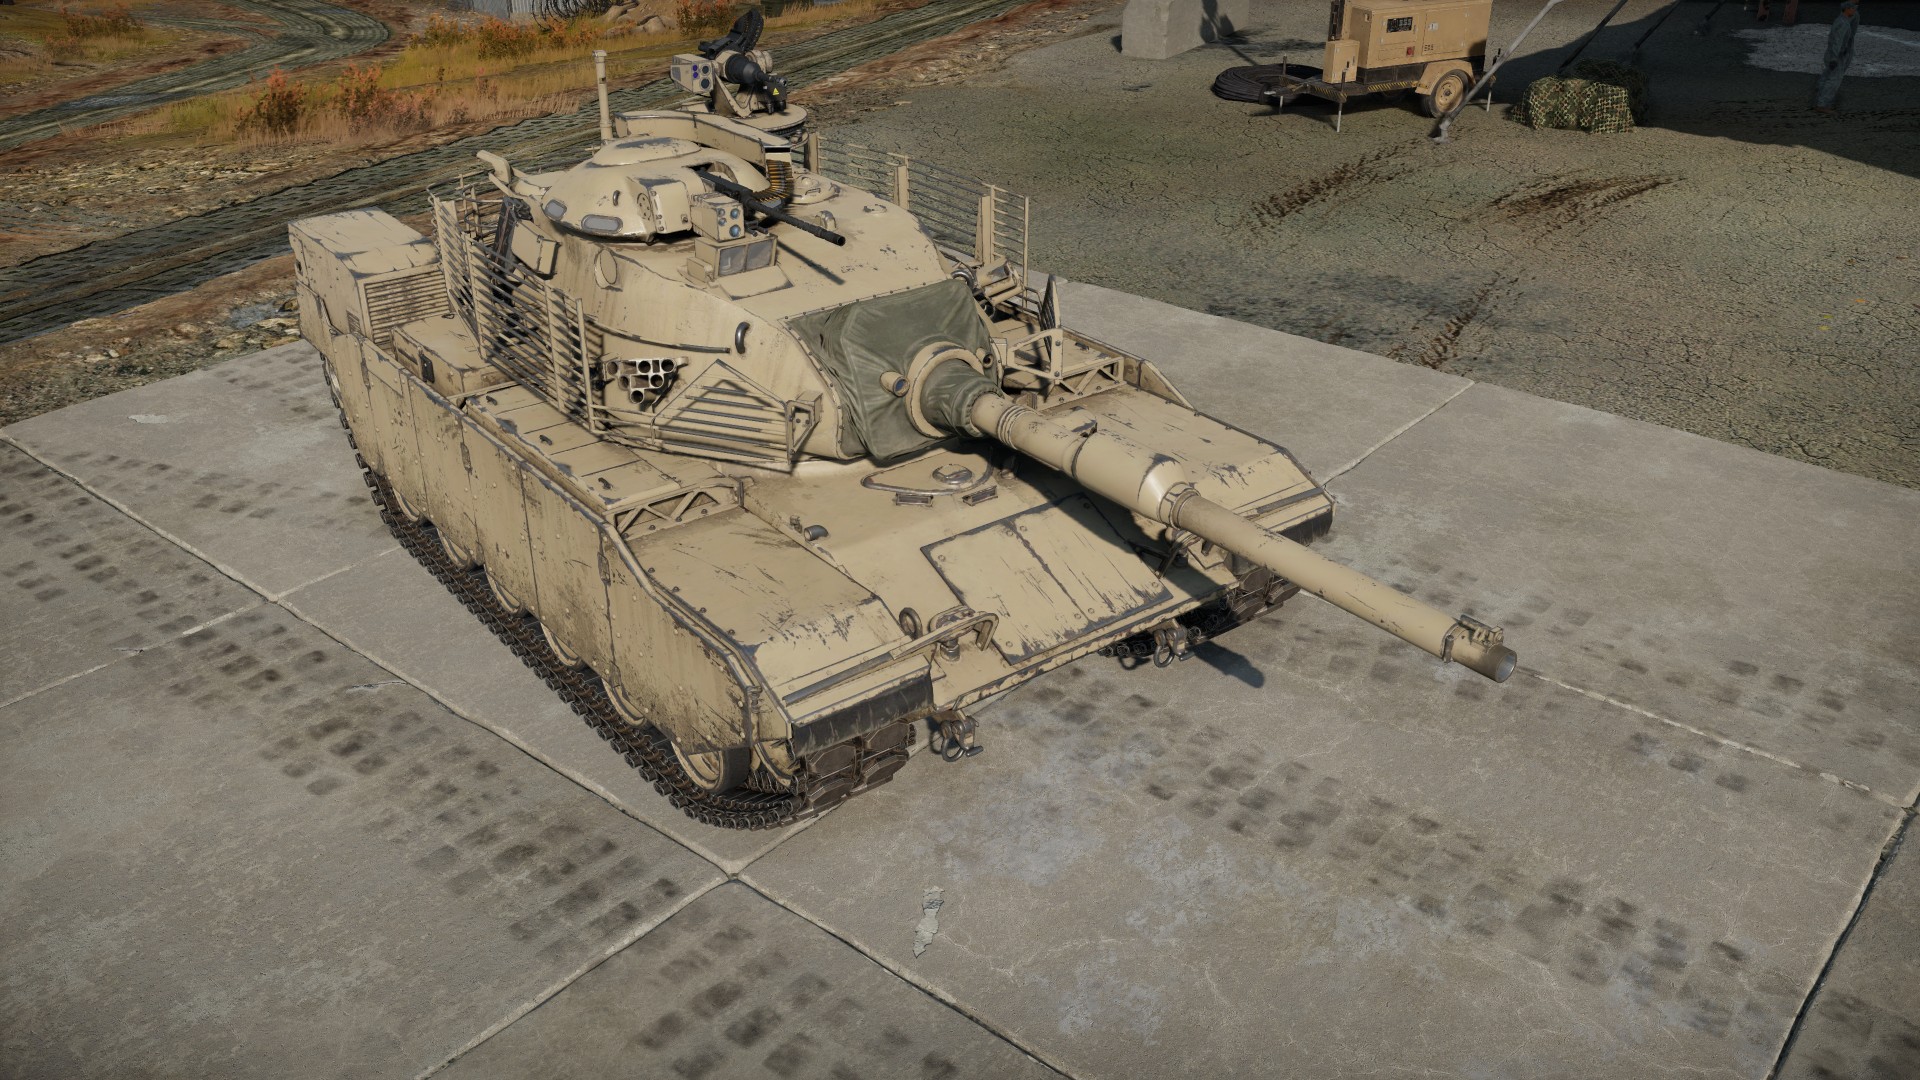 Ambt танк. M60 MBT. Tank m60 Ambt. M60 цфдлфкщщгтив Ambt. Амбт танк Wiki.